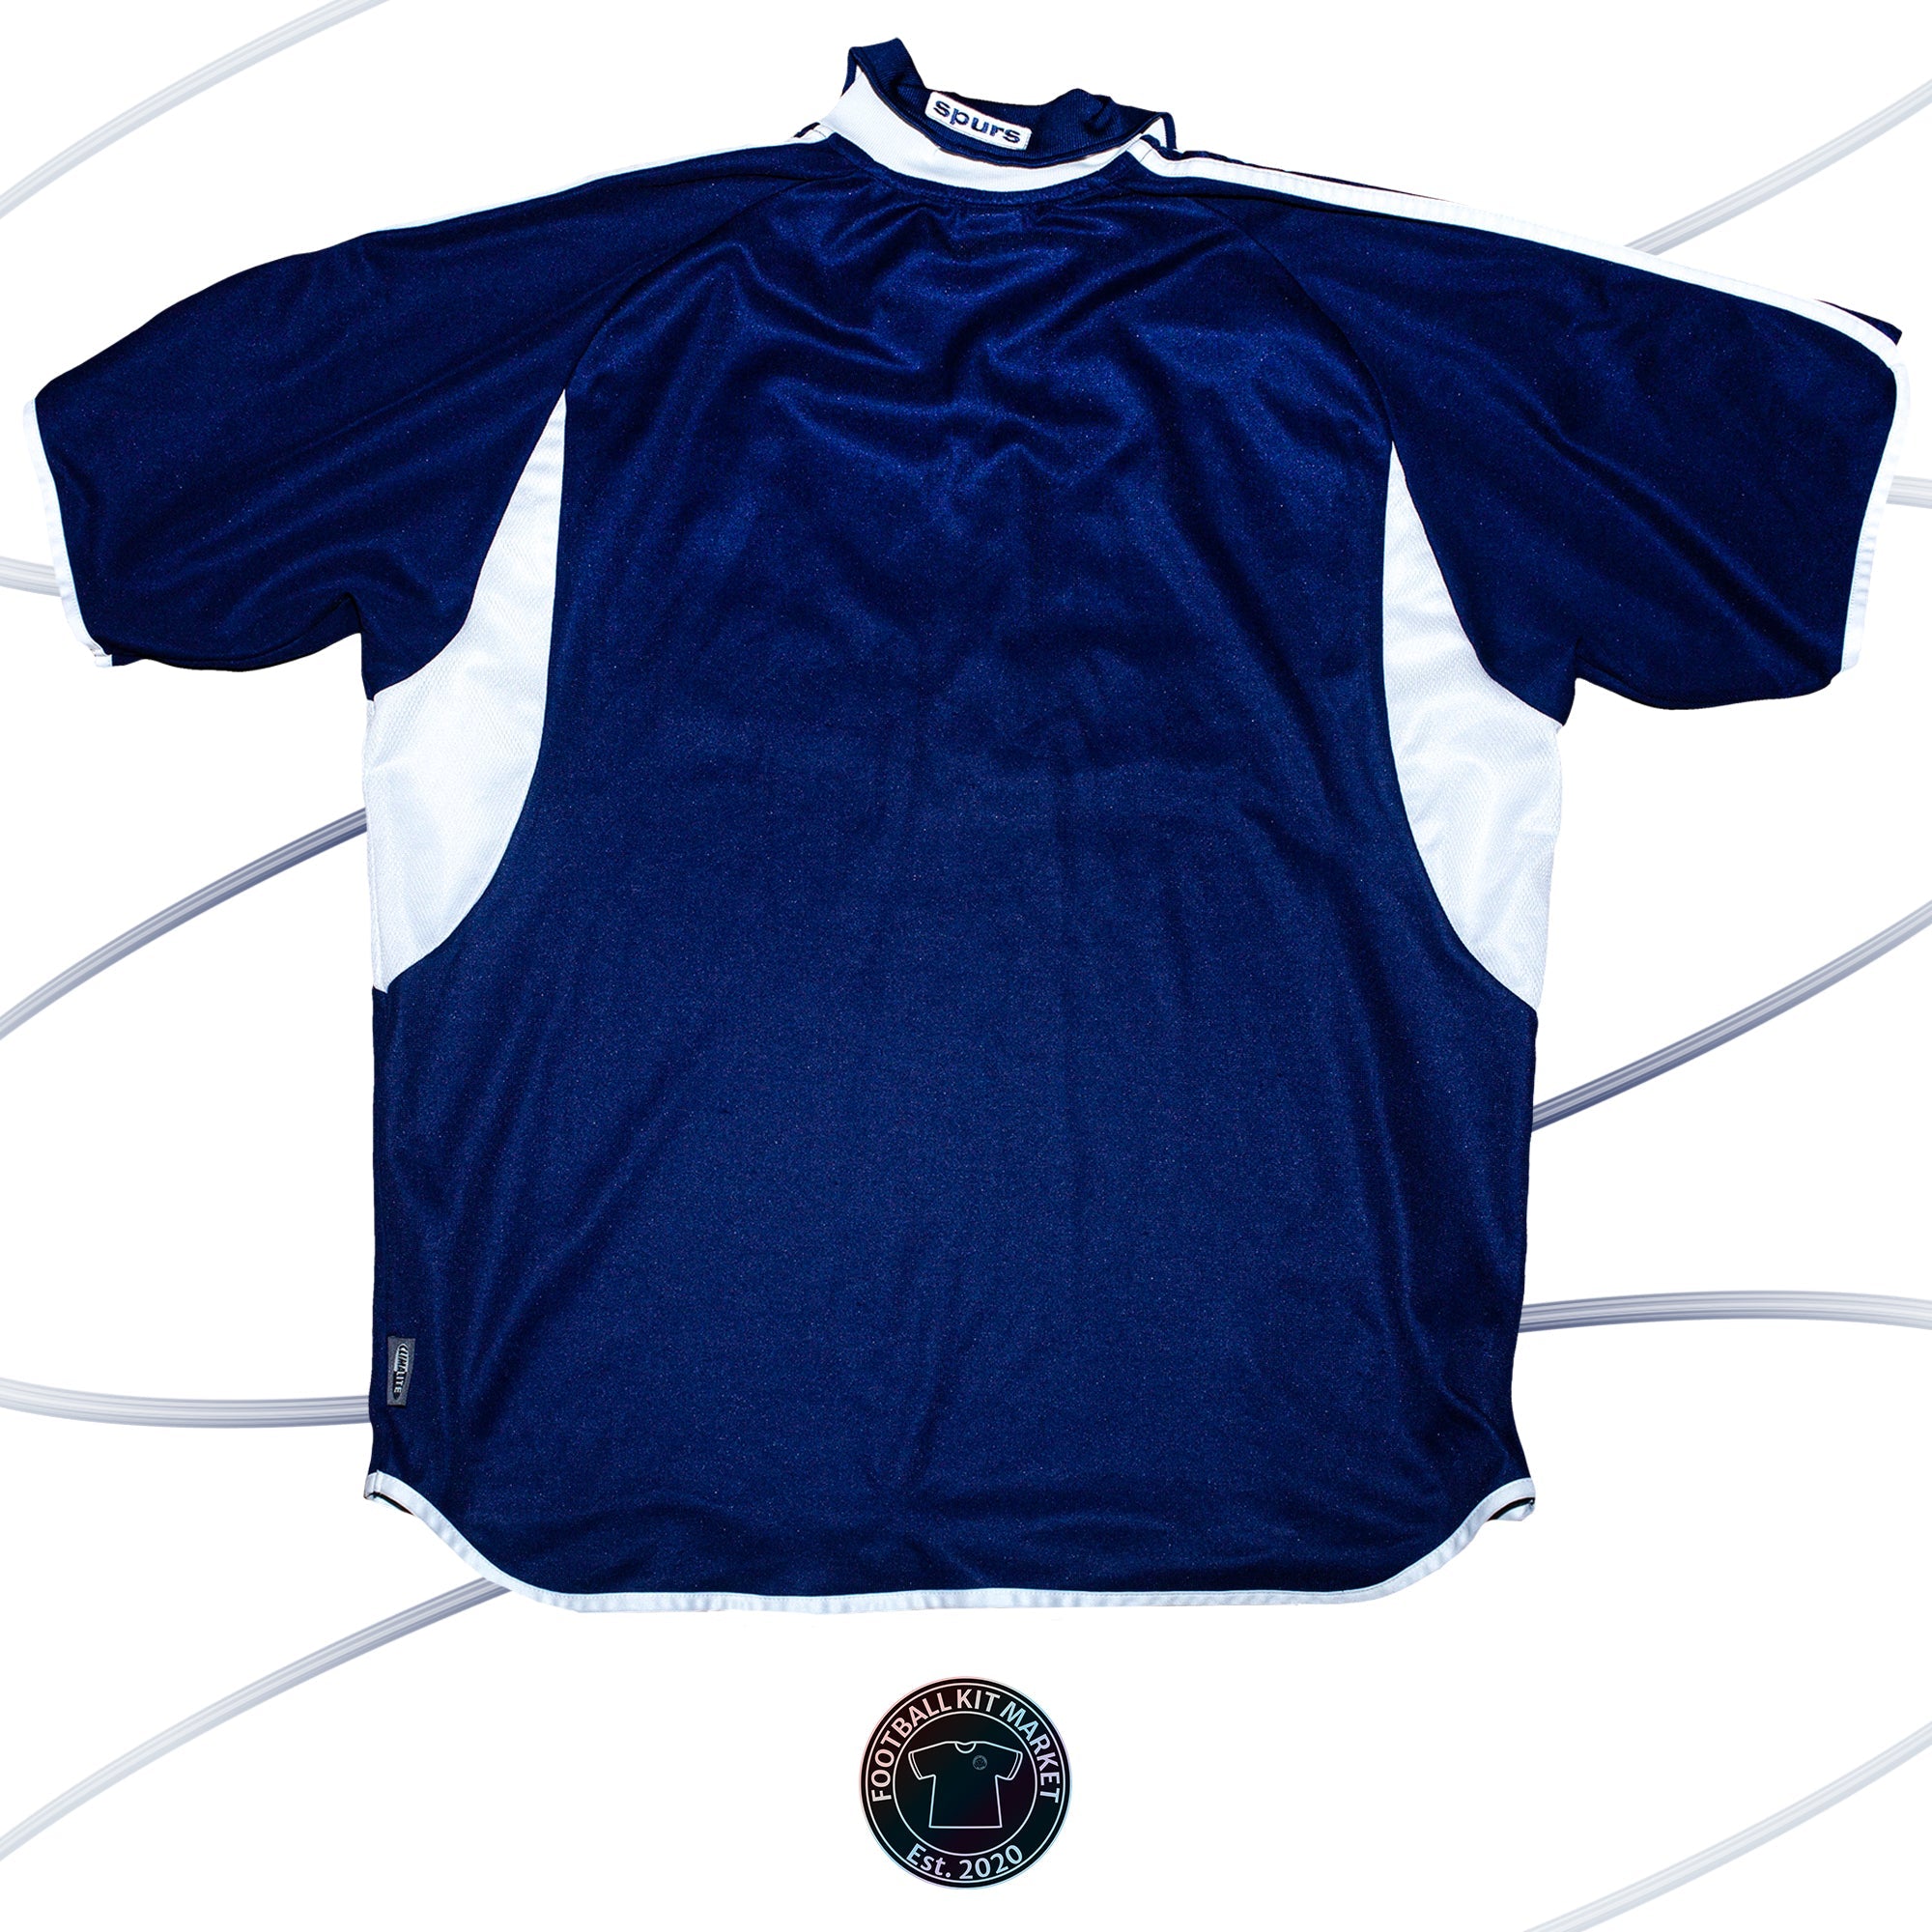 Genuine TOTTENHAM HOTSPUR (Spurs) Away Shirt (2000-2001) - ADIDAS (XL) - Product Image from Football Kit Market